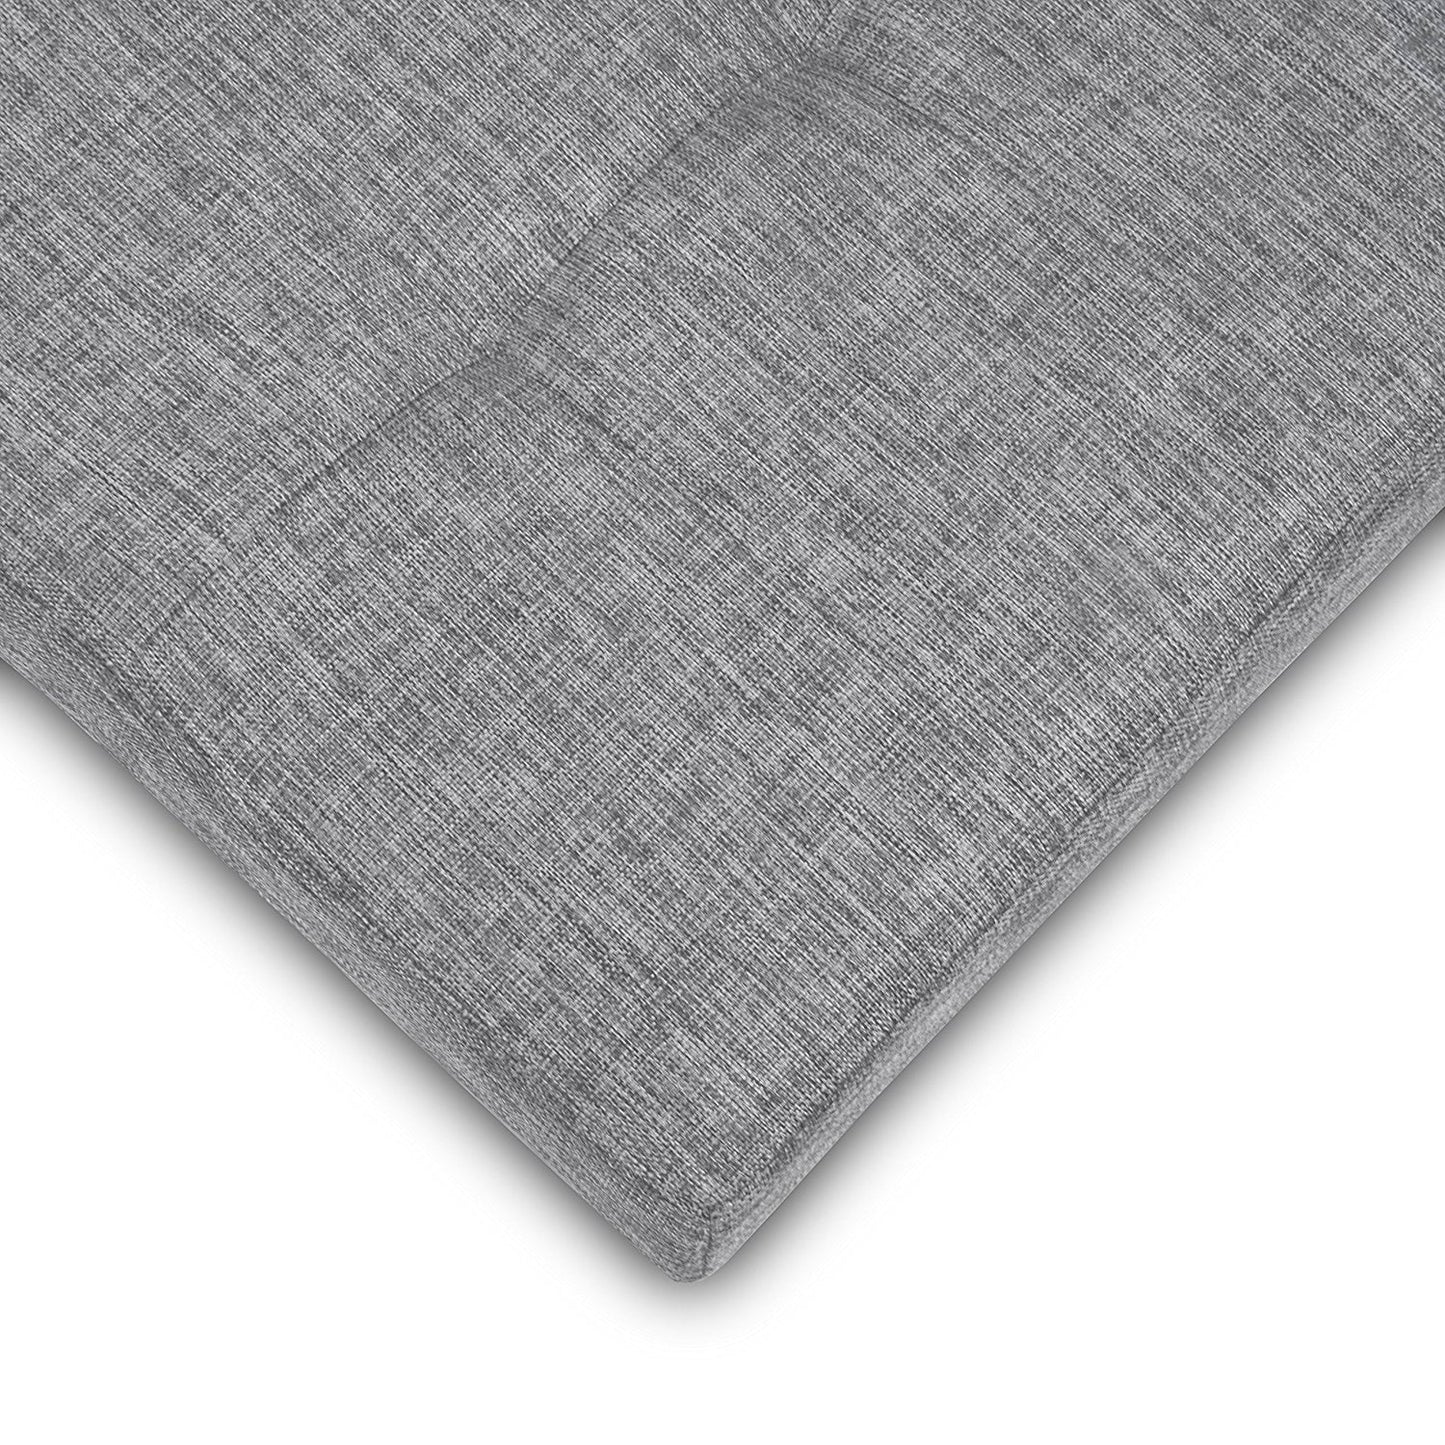 Linen Fabric Ottoman with SMART LIFT Top - 2 Piece Set